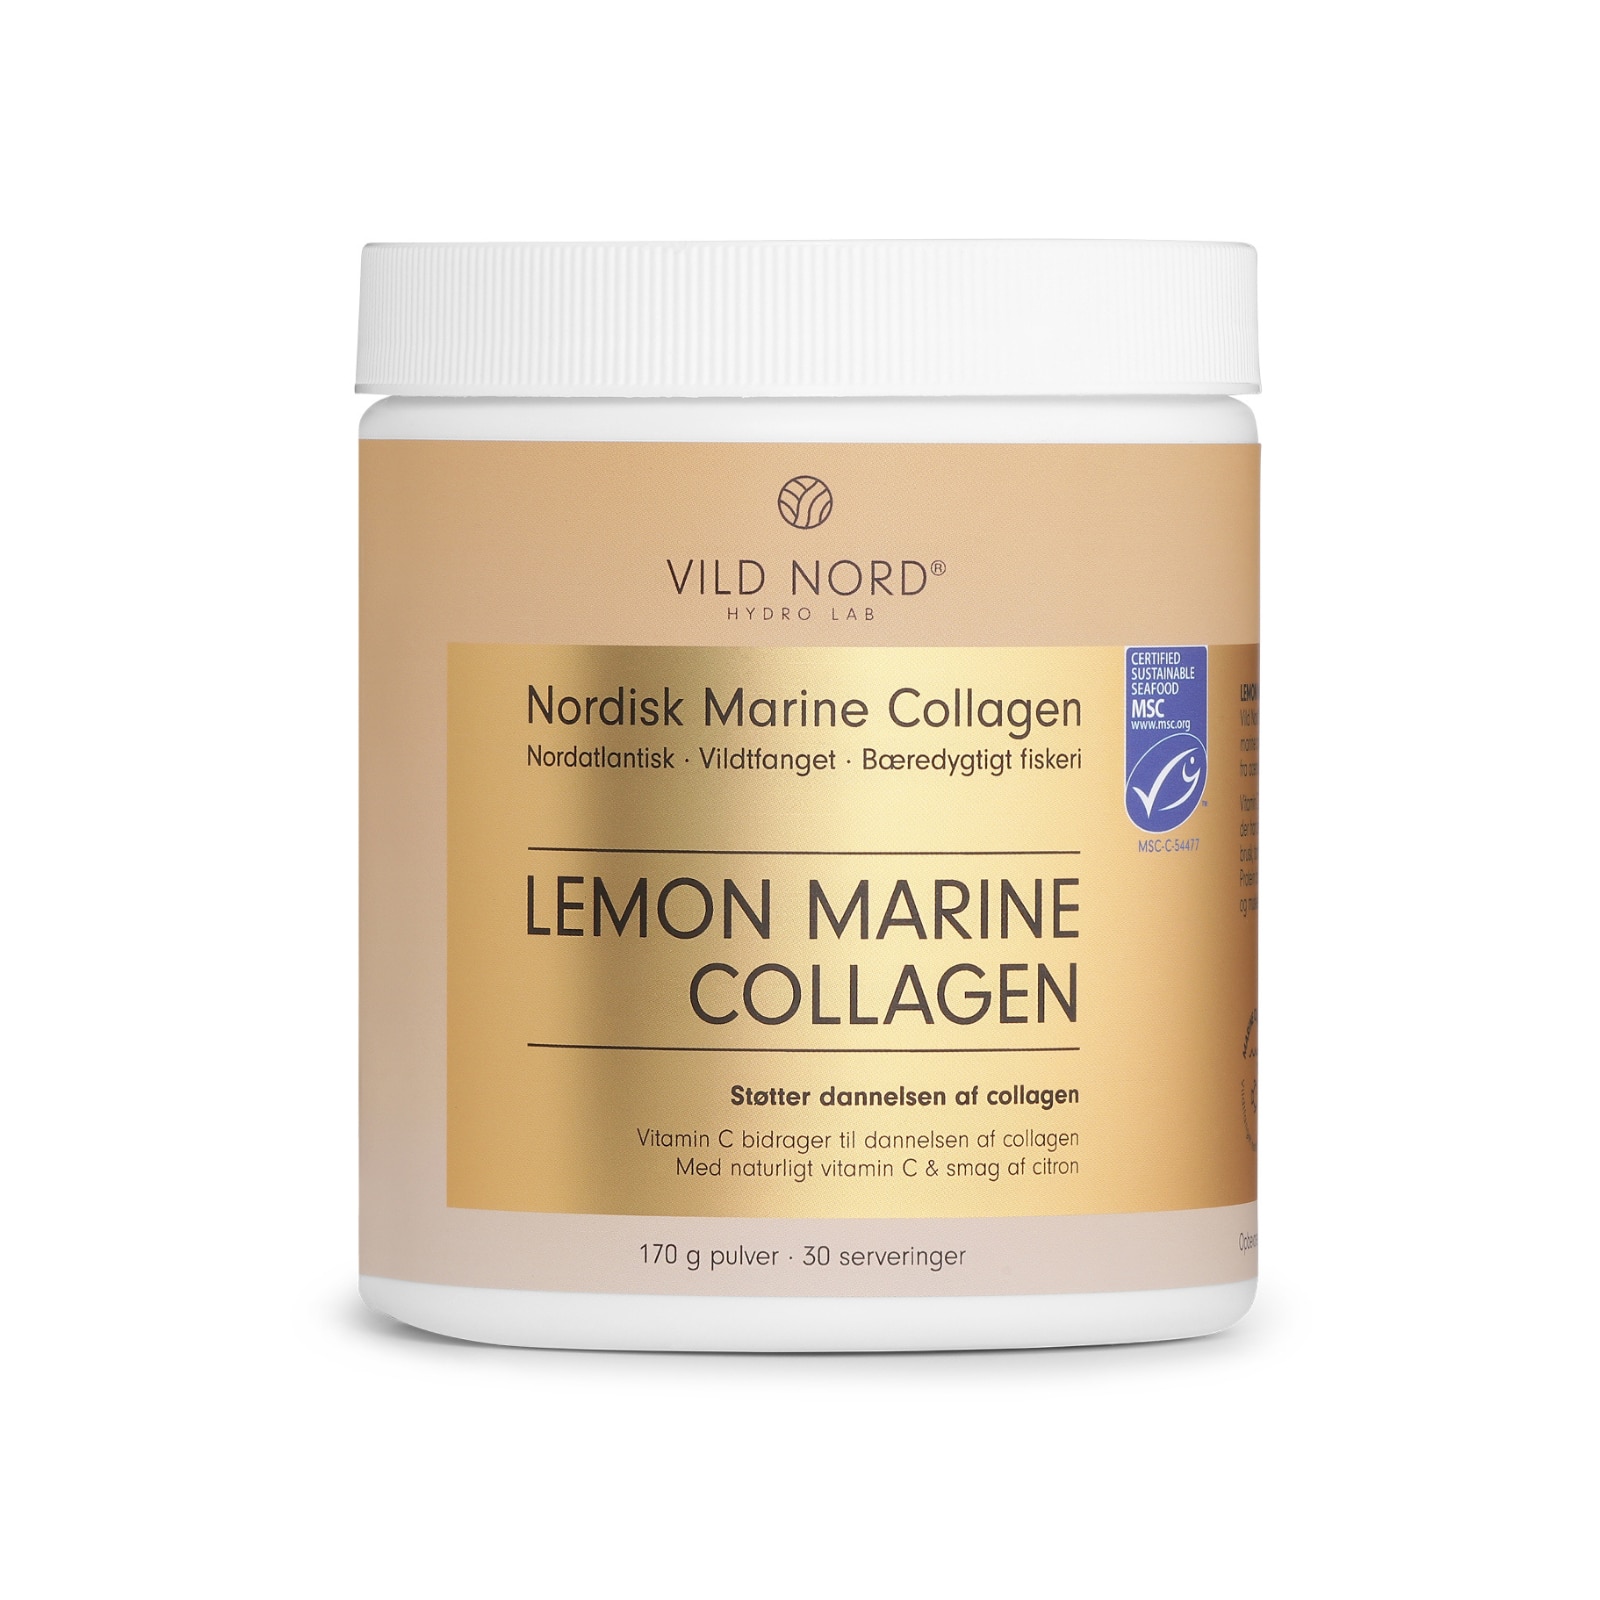 VILD NORD® Lemon Marine Collagen